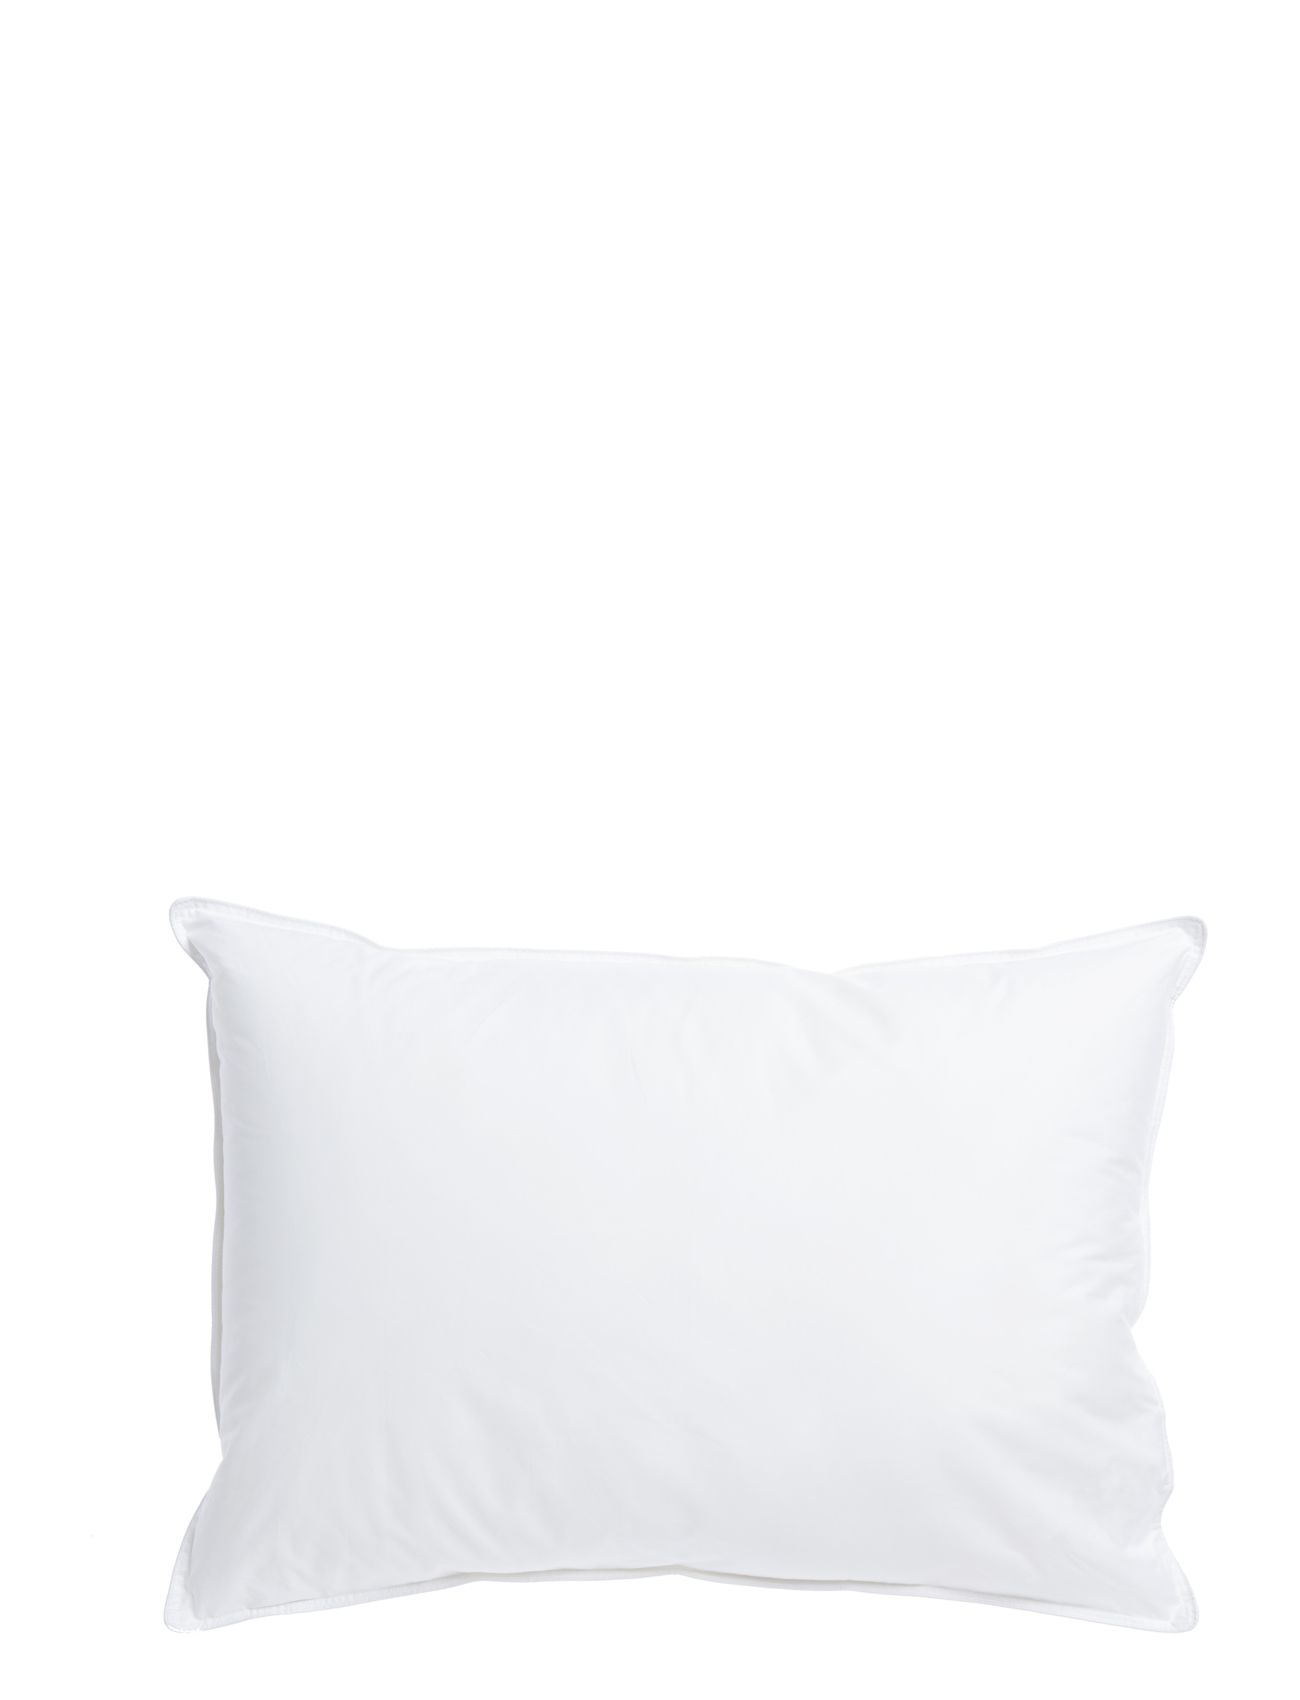 Freje Medium Dunkudde Home Textiles Bedtextiles Pillows White Høie Of Scandinavia